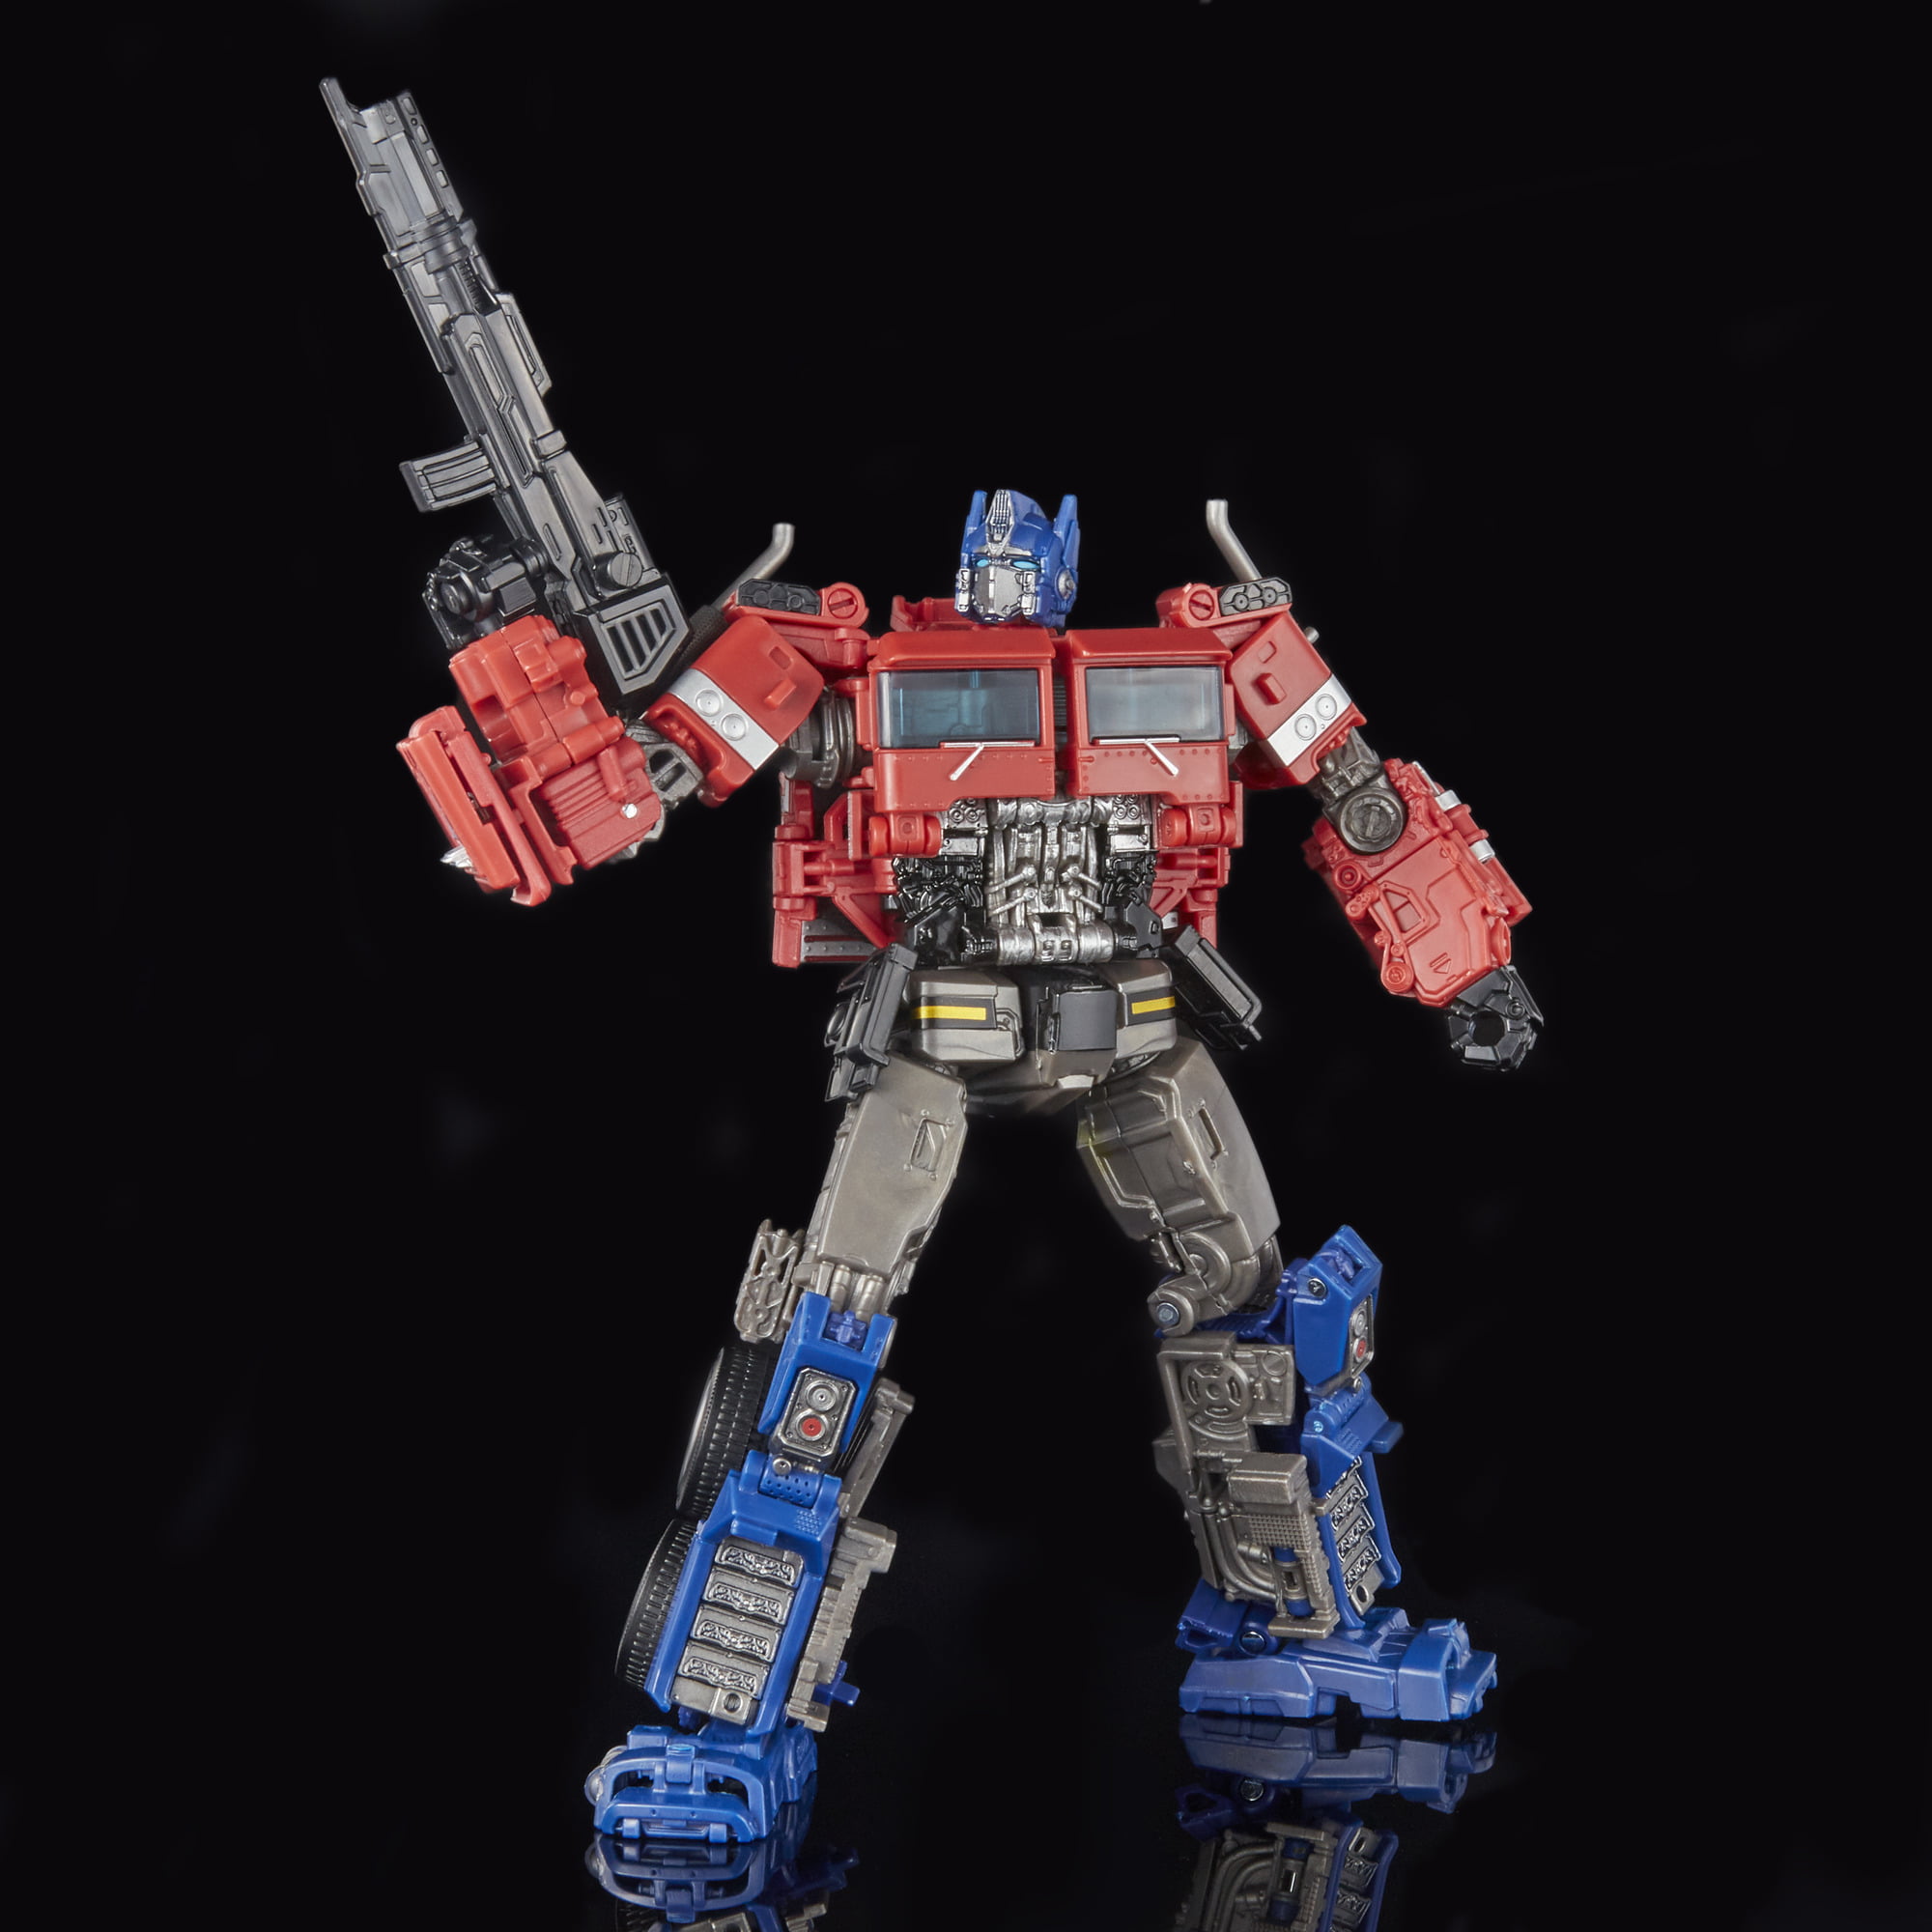 transformers toys studio series 38 voyager class bumblebee movie optimus prime